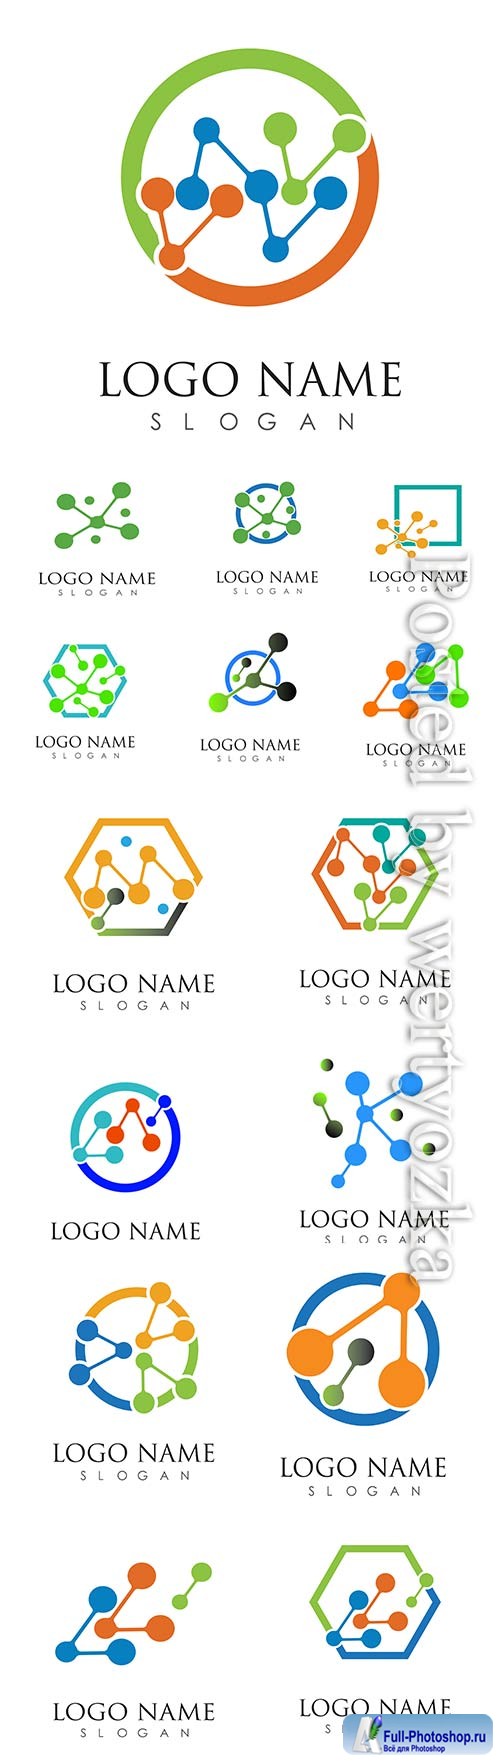 Molecule logo vector icon illustration design template